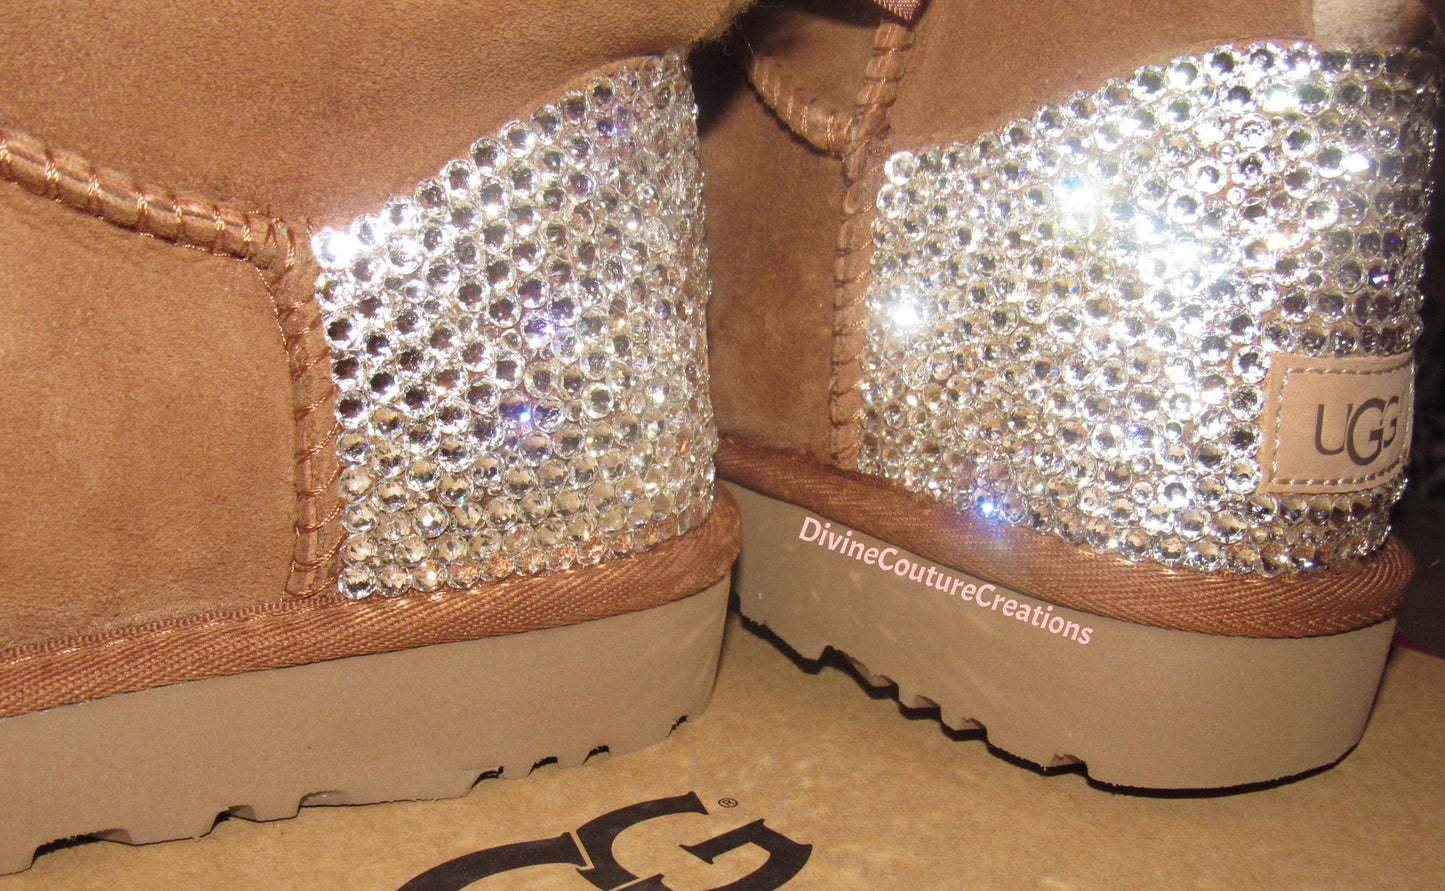 UGG Tall Bailey Bow II Boots Made with Xirus 2088 Crystals Shoes by BlingxAddict | BlingxAddict